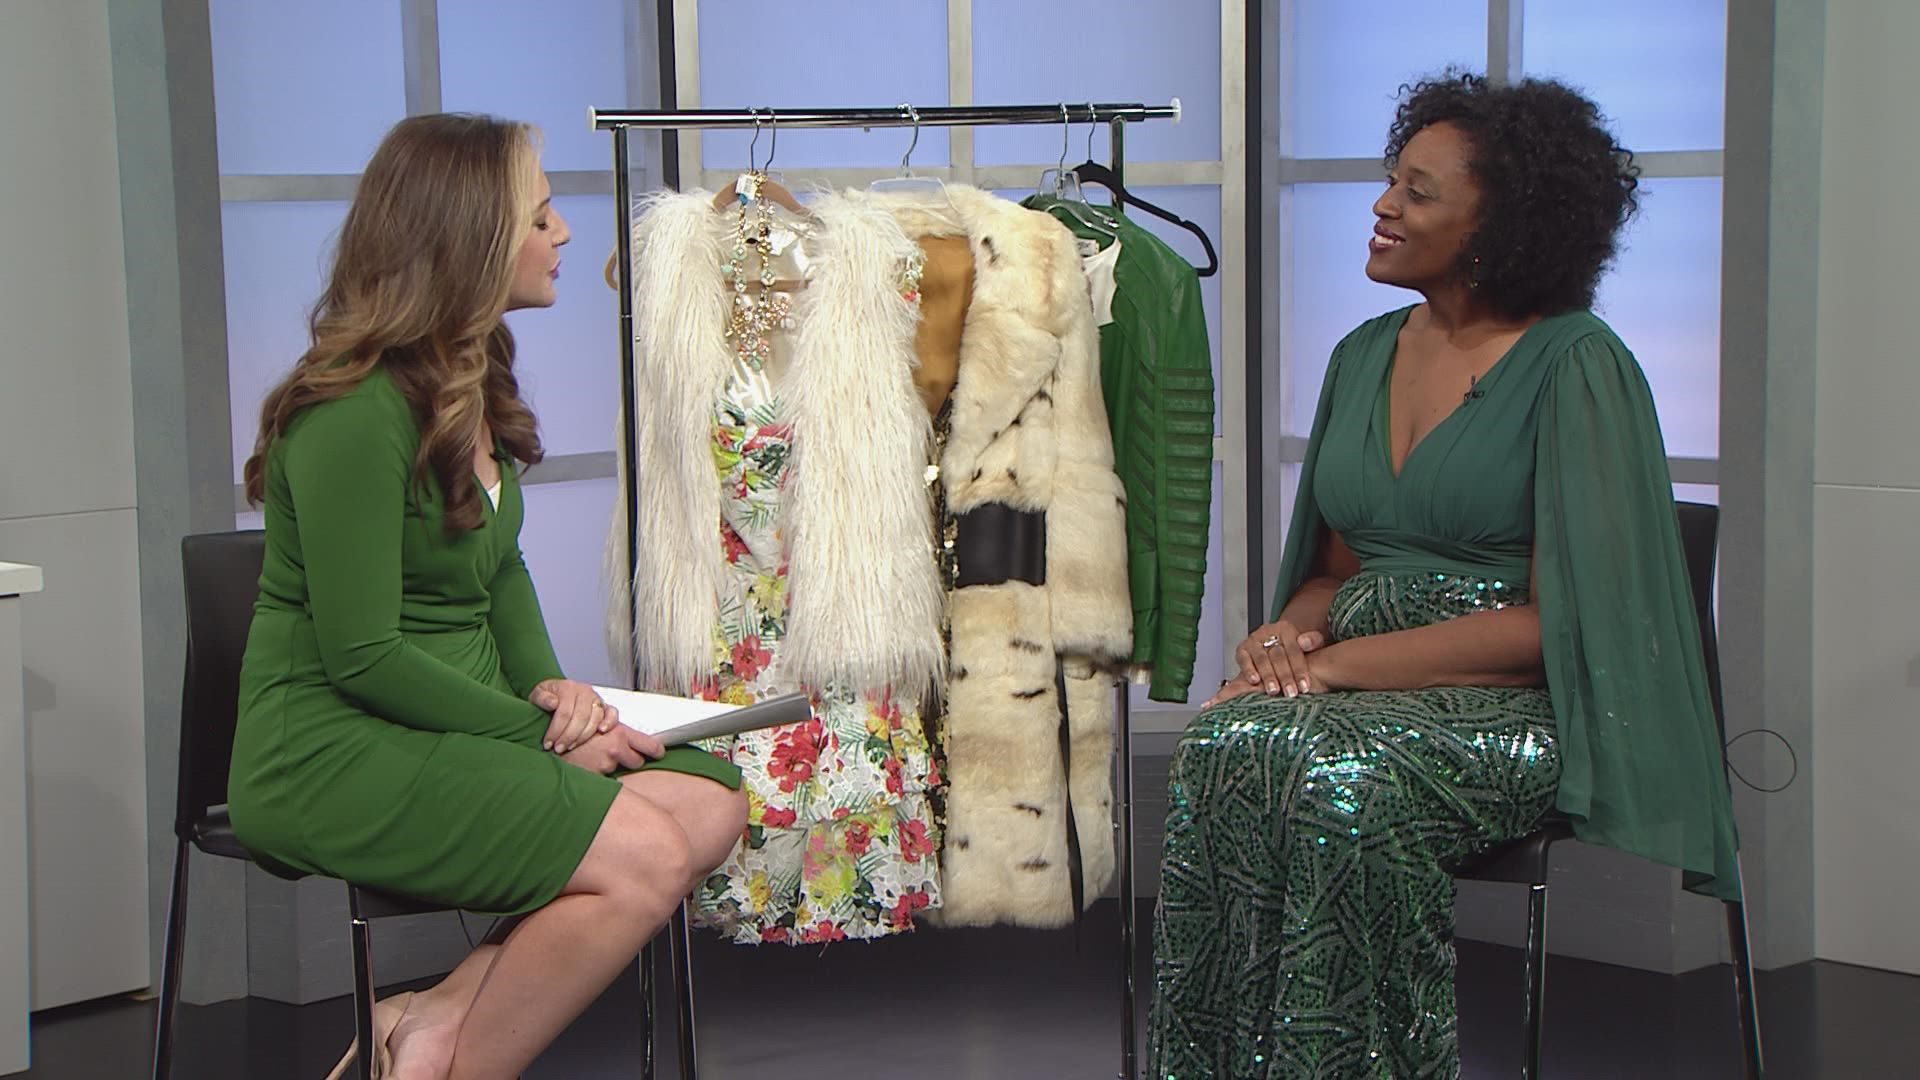 Amara Martin joins 9NEWS to talk about Dress for Success Denver.